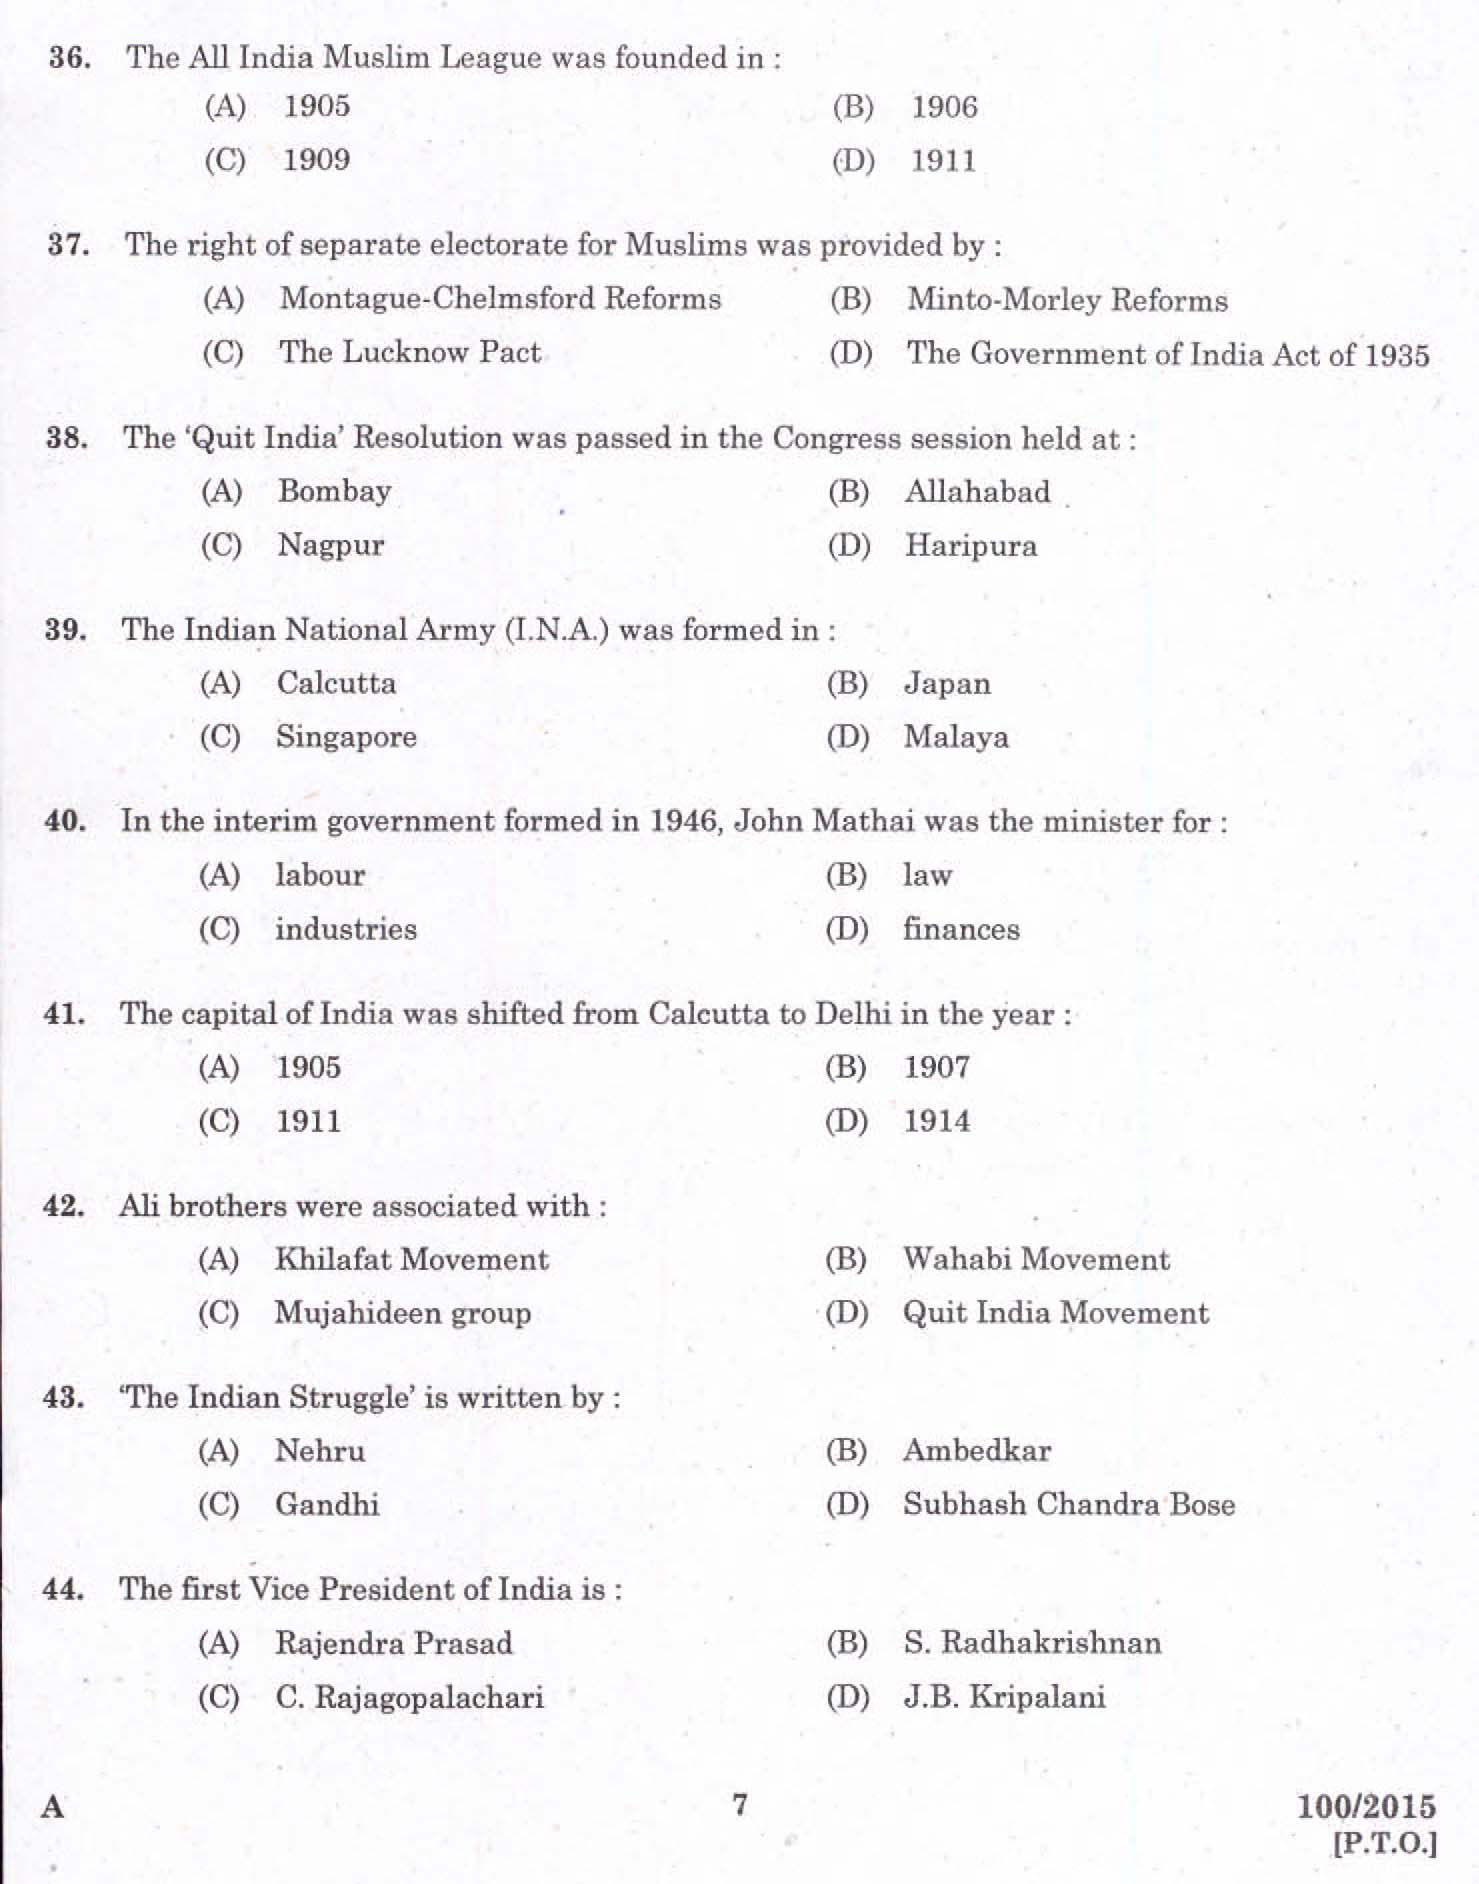 Kerala LD Typist Exam 2015 Question Paper Code 1002015 5